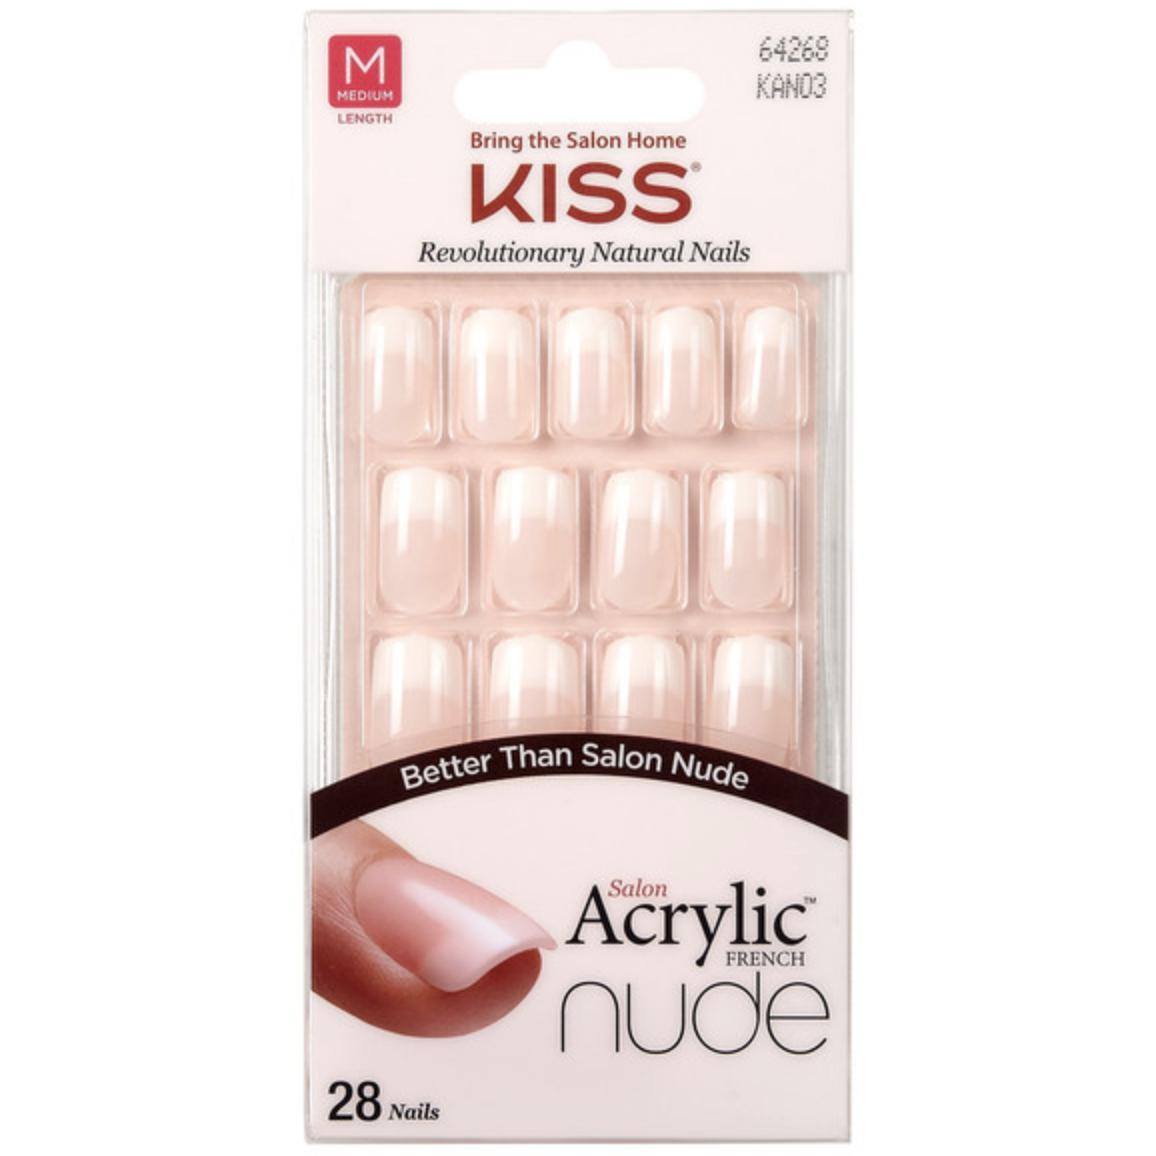 Kiss Acrylic Nude cashmere